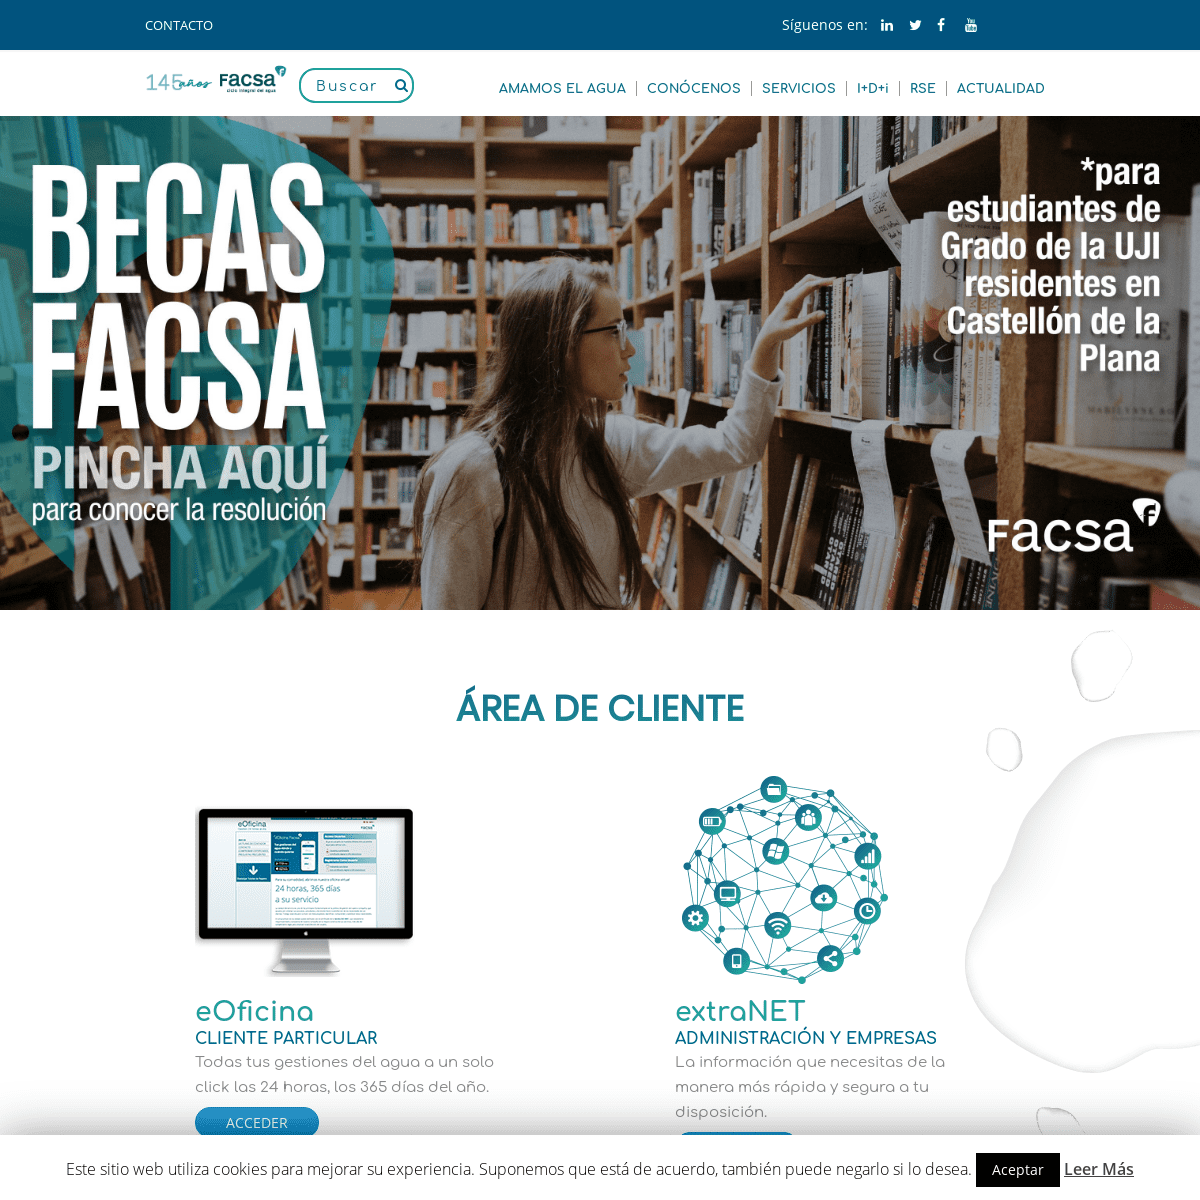 A complete backup of facsa.com